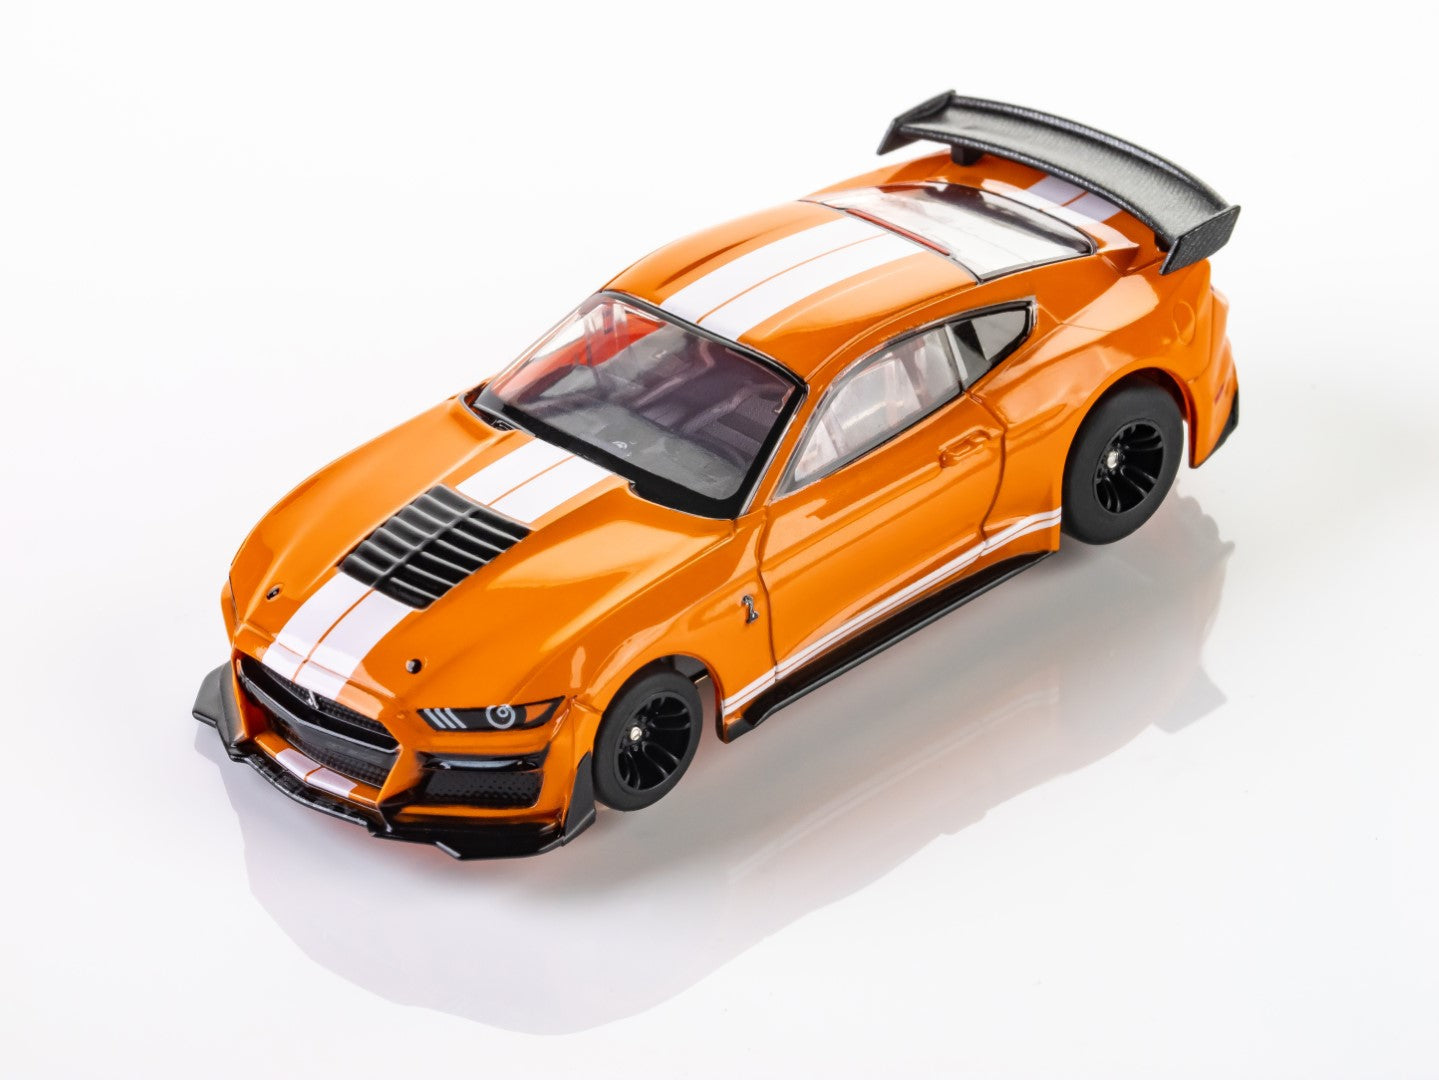 AFX 22069 Ford Mustang GT500 Twister Orange HO Scale Slot Car MegaG Plus - PowerHobby